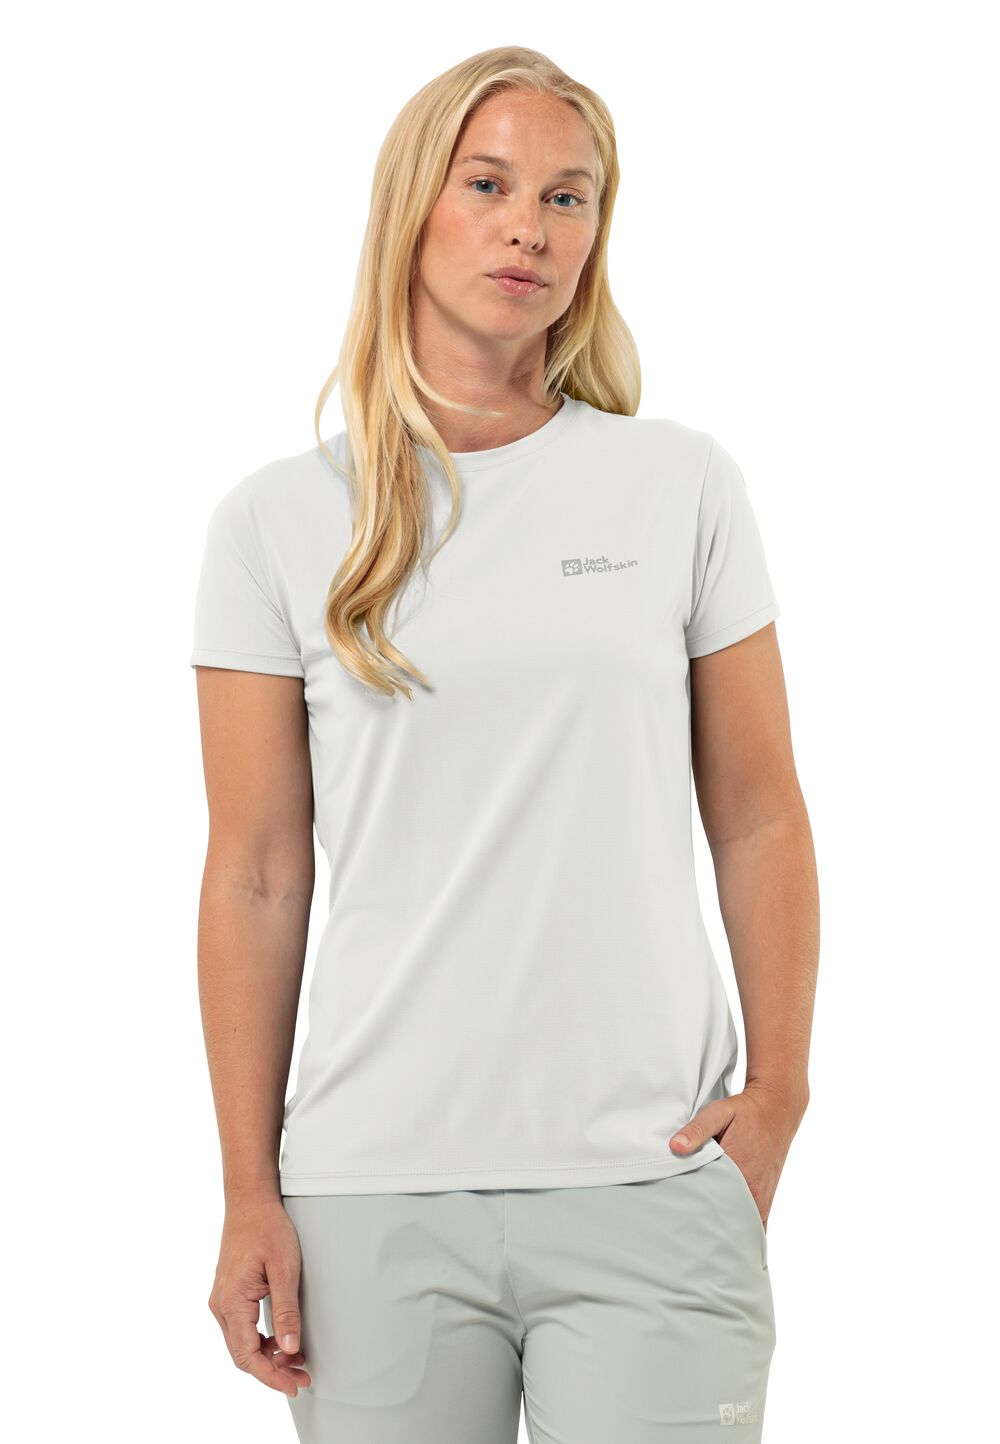 Jack Wolfskin Prelight Trail T-Shirt Women Functioneel shirt Dames M wit stark white